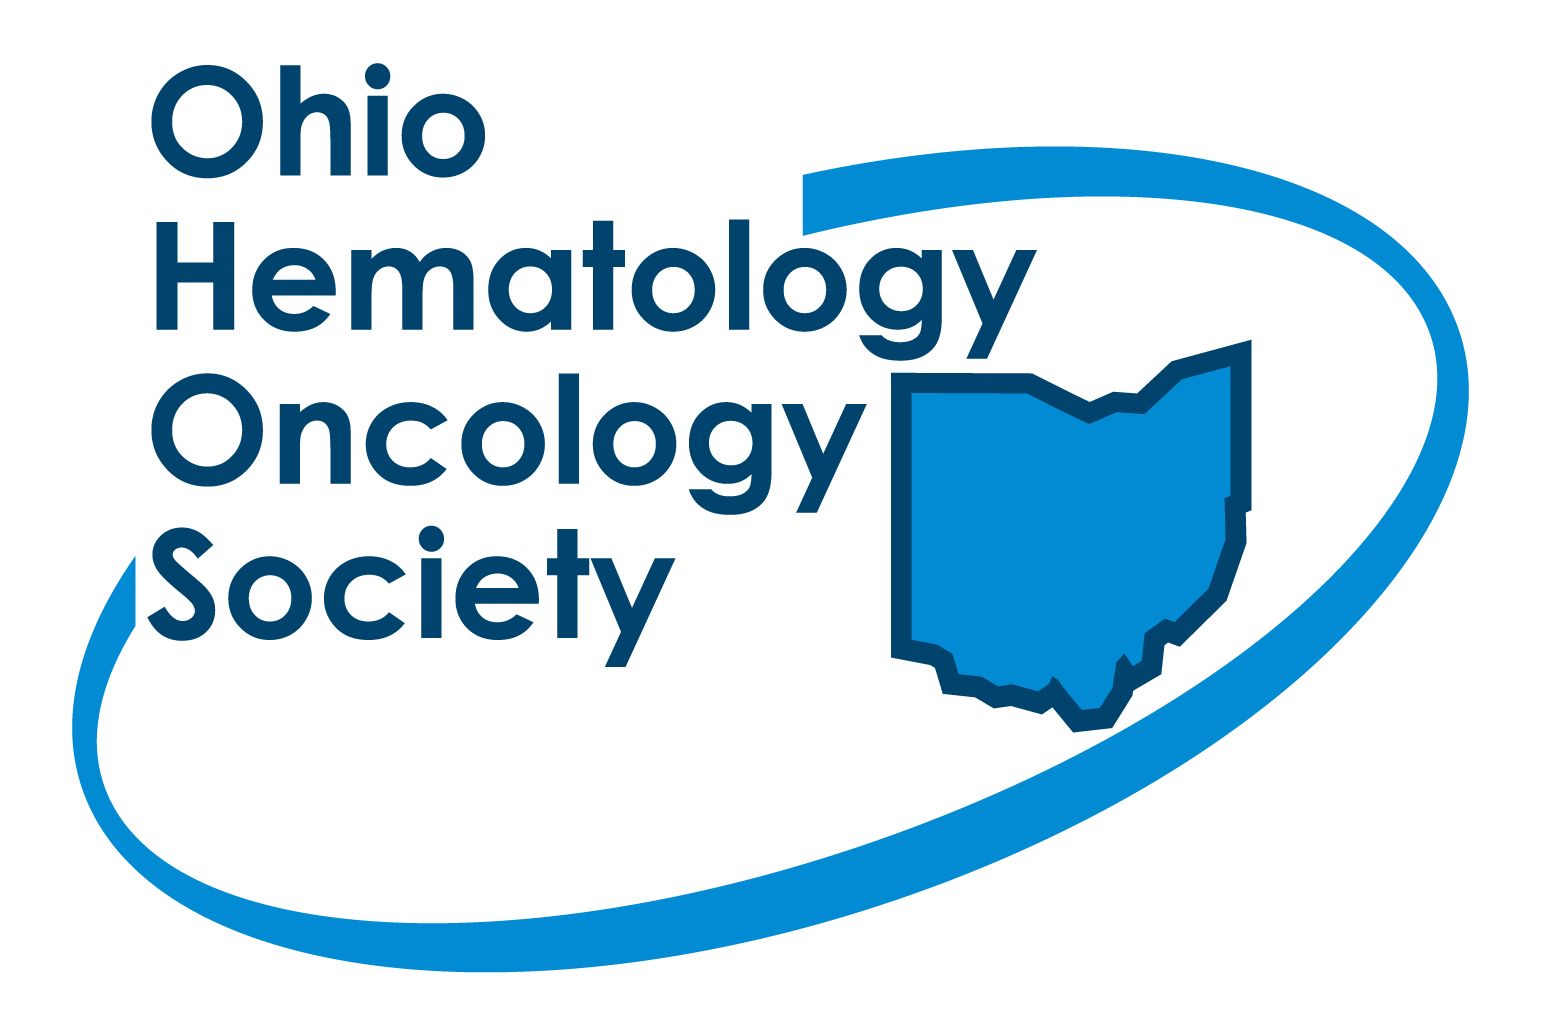 Ohio Hematology Oncology Society logo